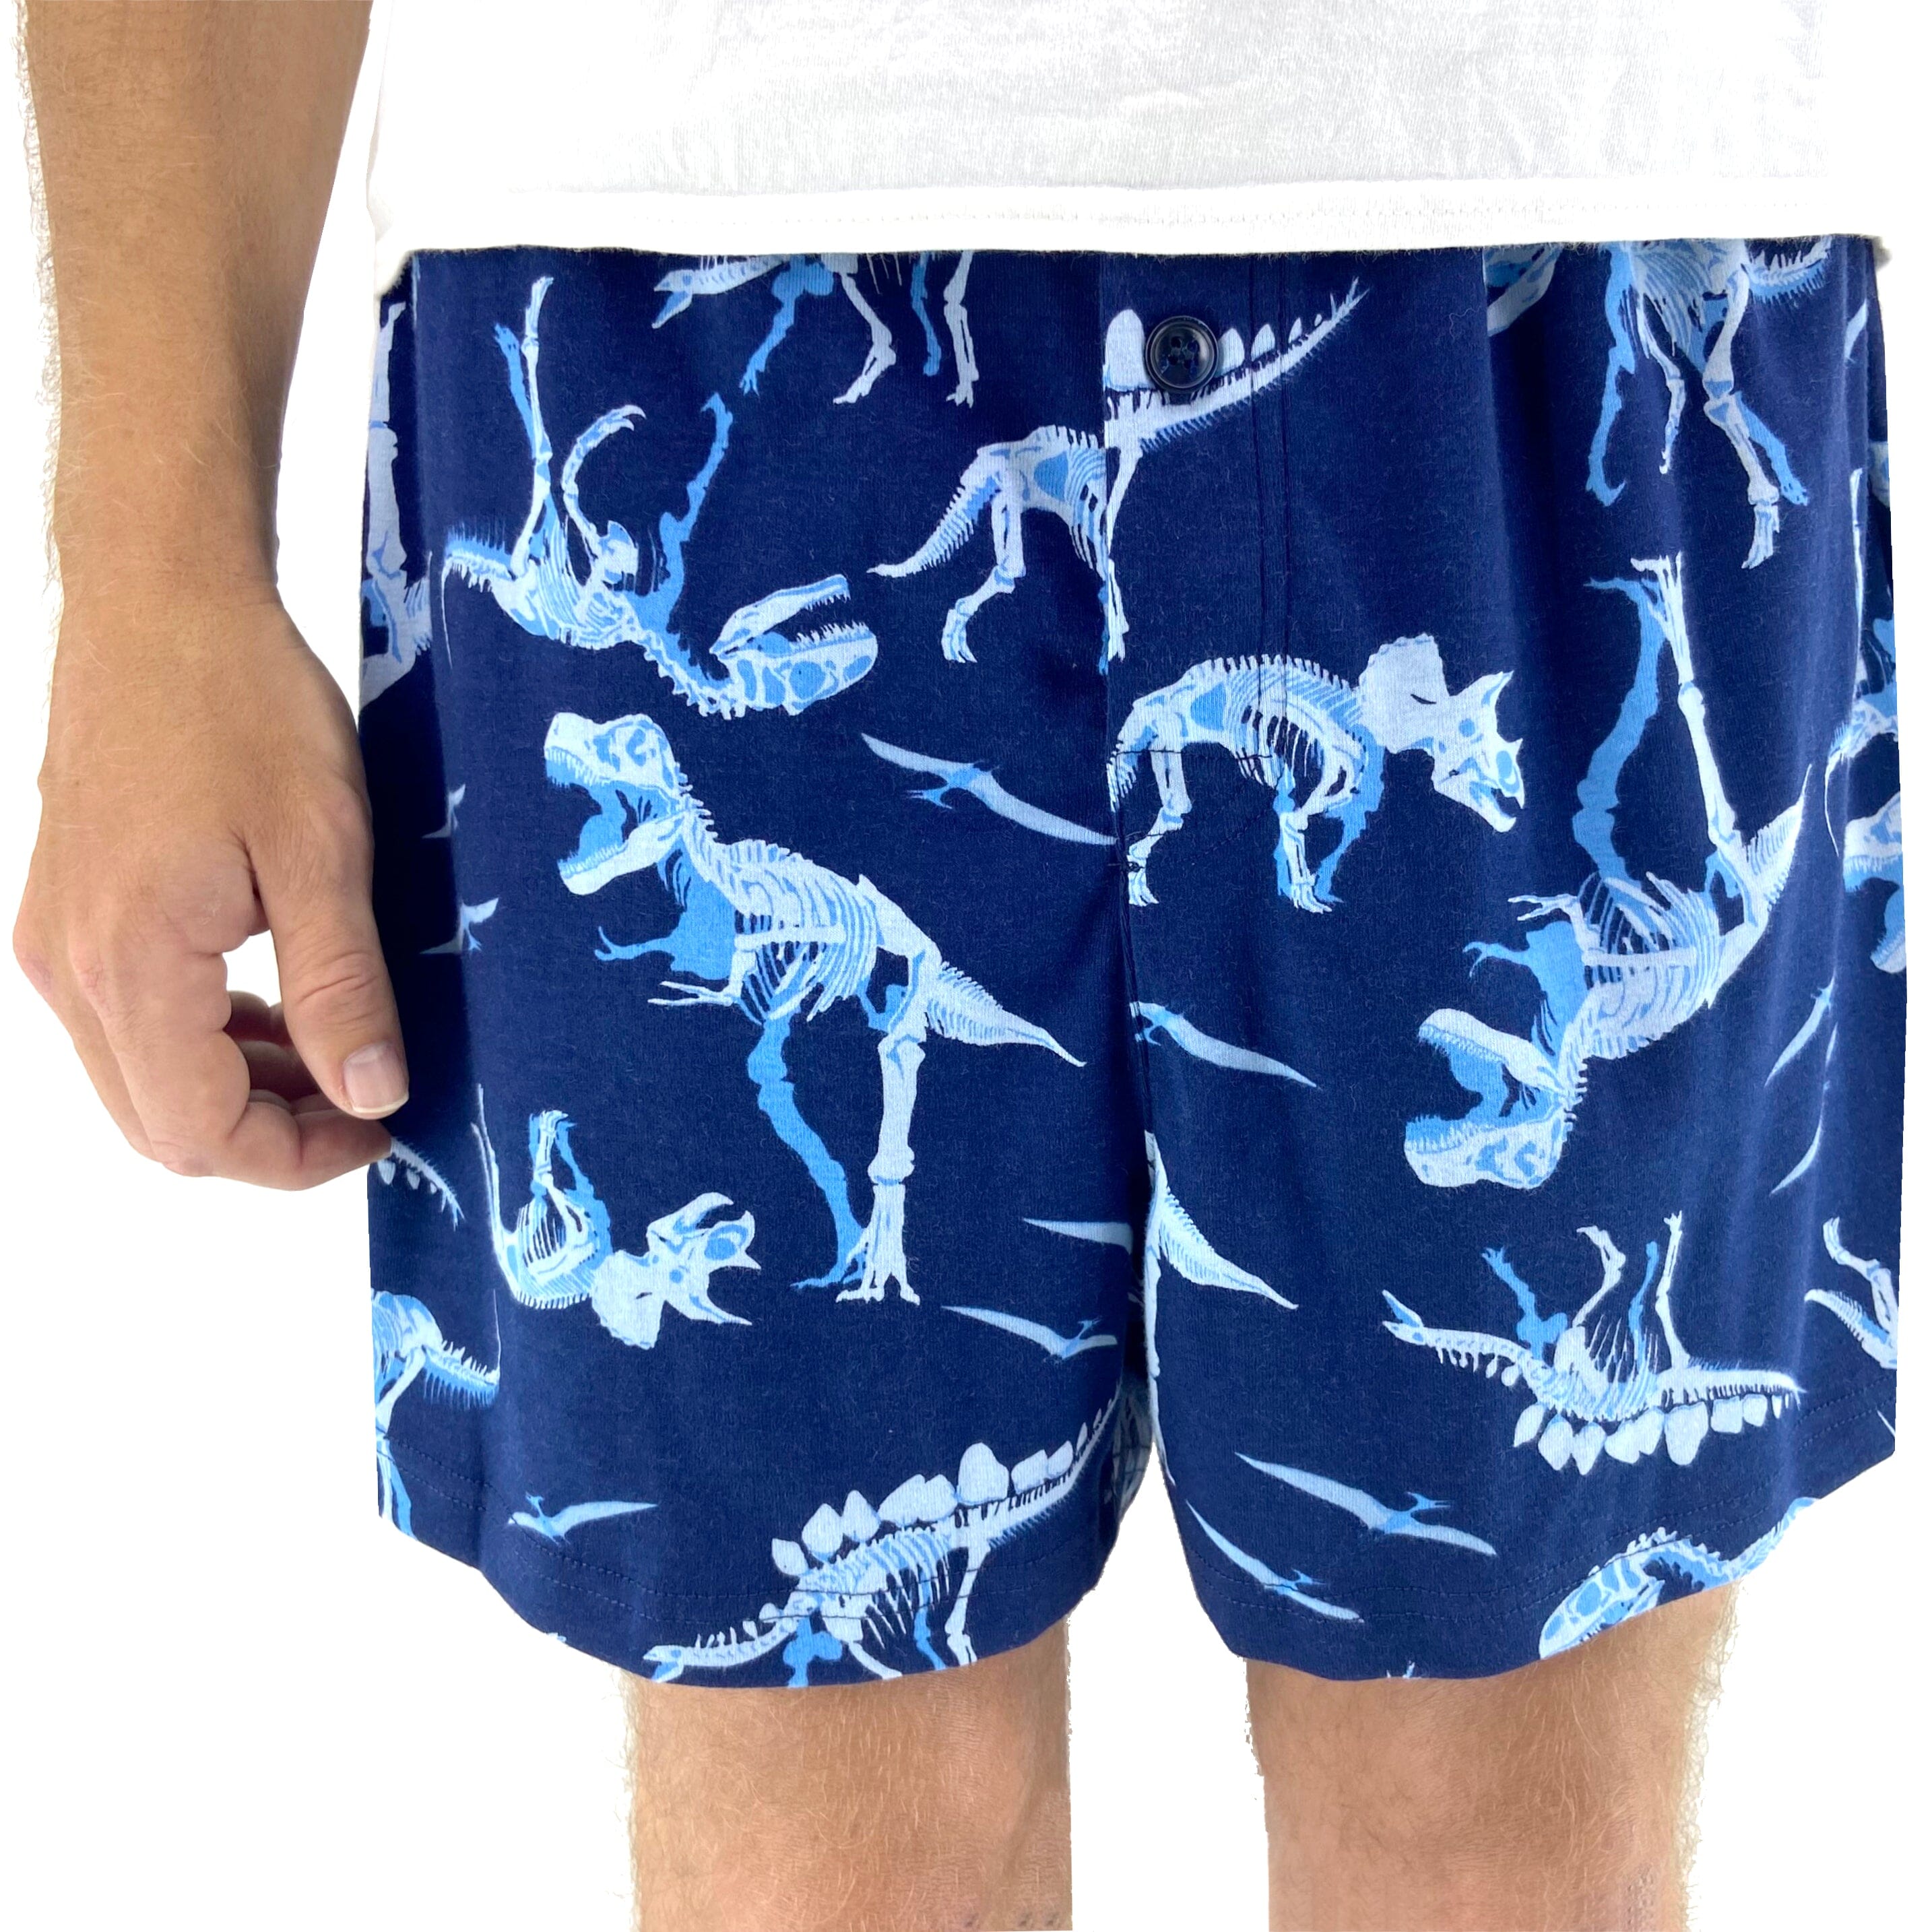 Shop Men's Cotton Stretch Knit Boxer Shorts in Colorful & Cool Prints!